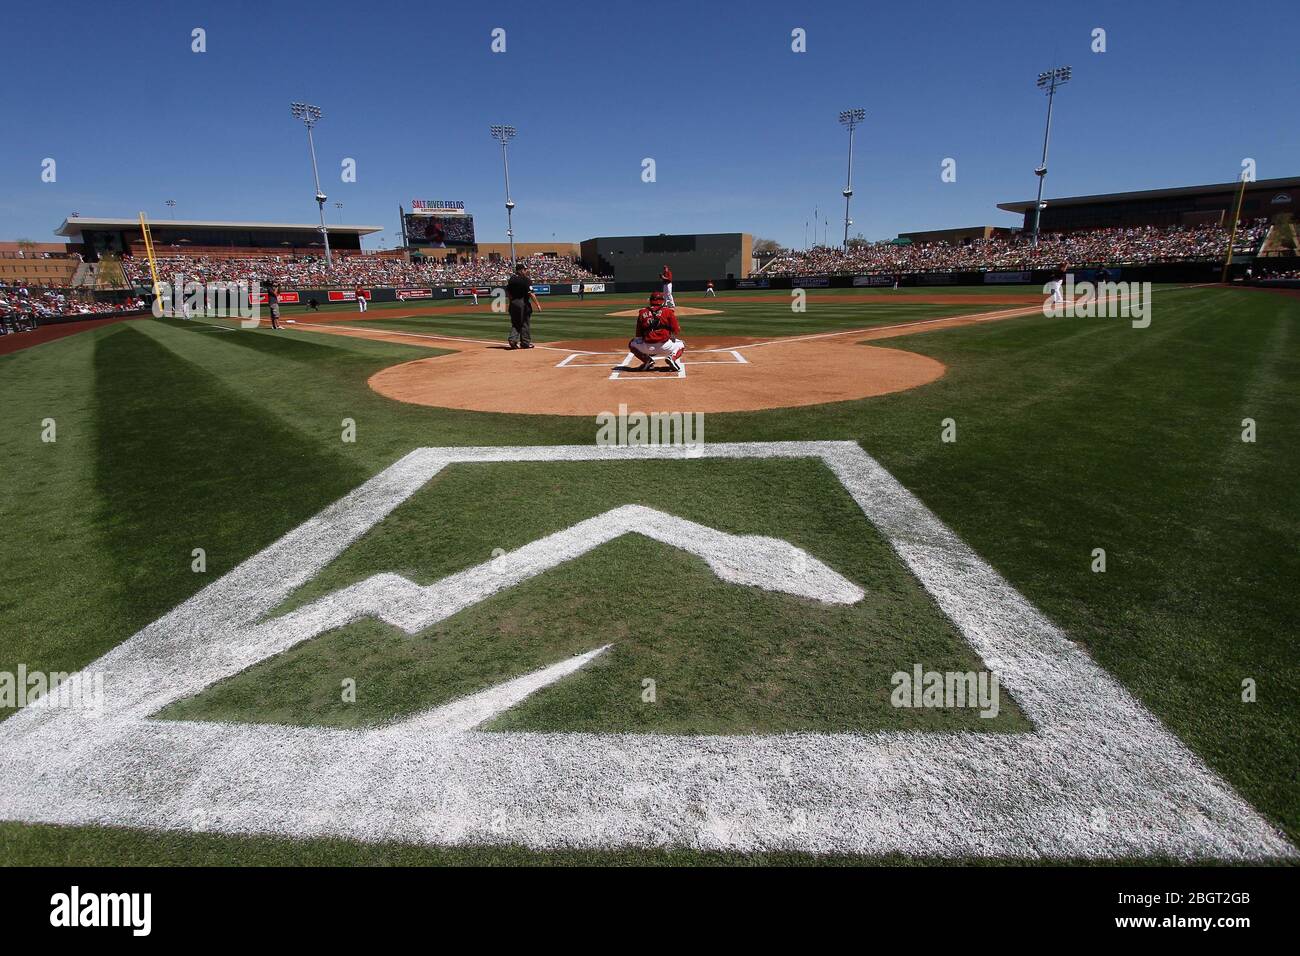 Arizona diamondbacks stadium hi-res stock photography and images - Alamy